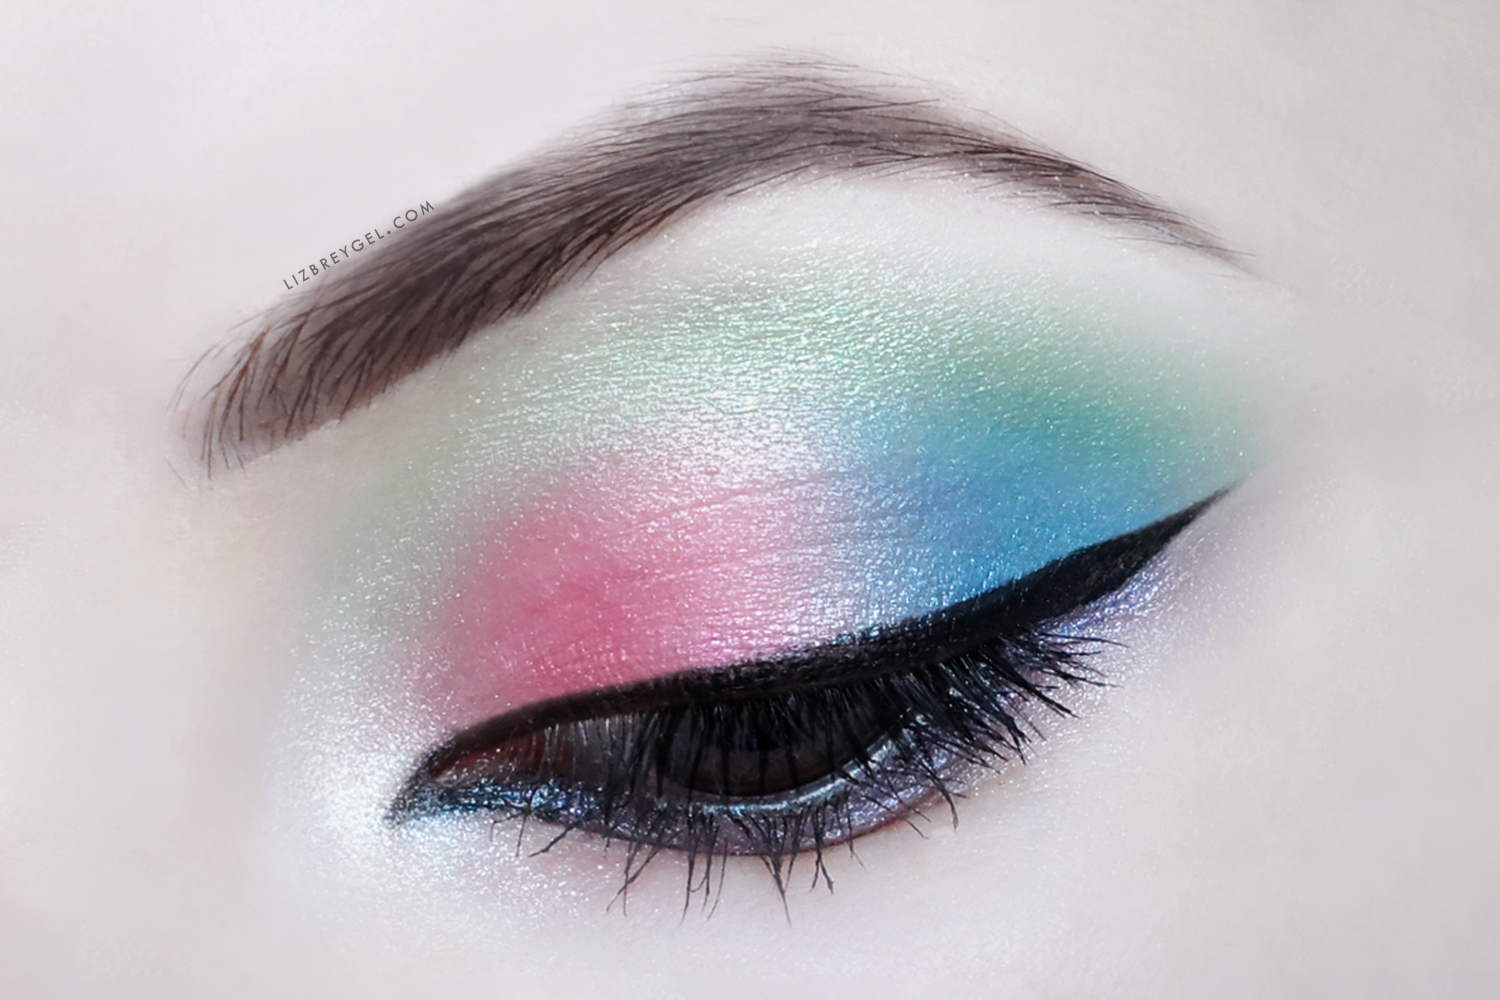 a close-up picture of an eye with dramatic makeup look, пастельный макияж глаз туториал